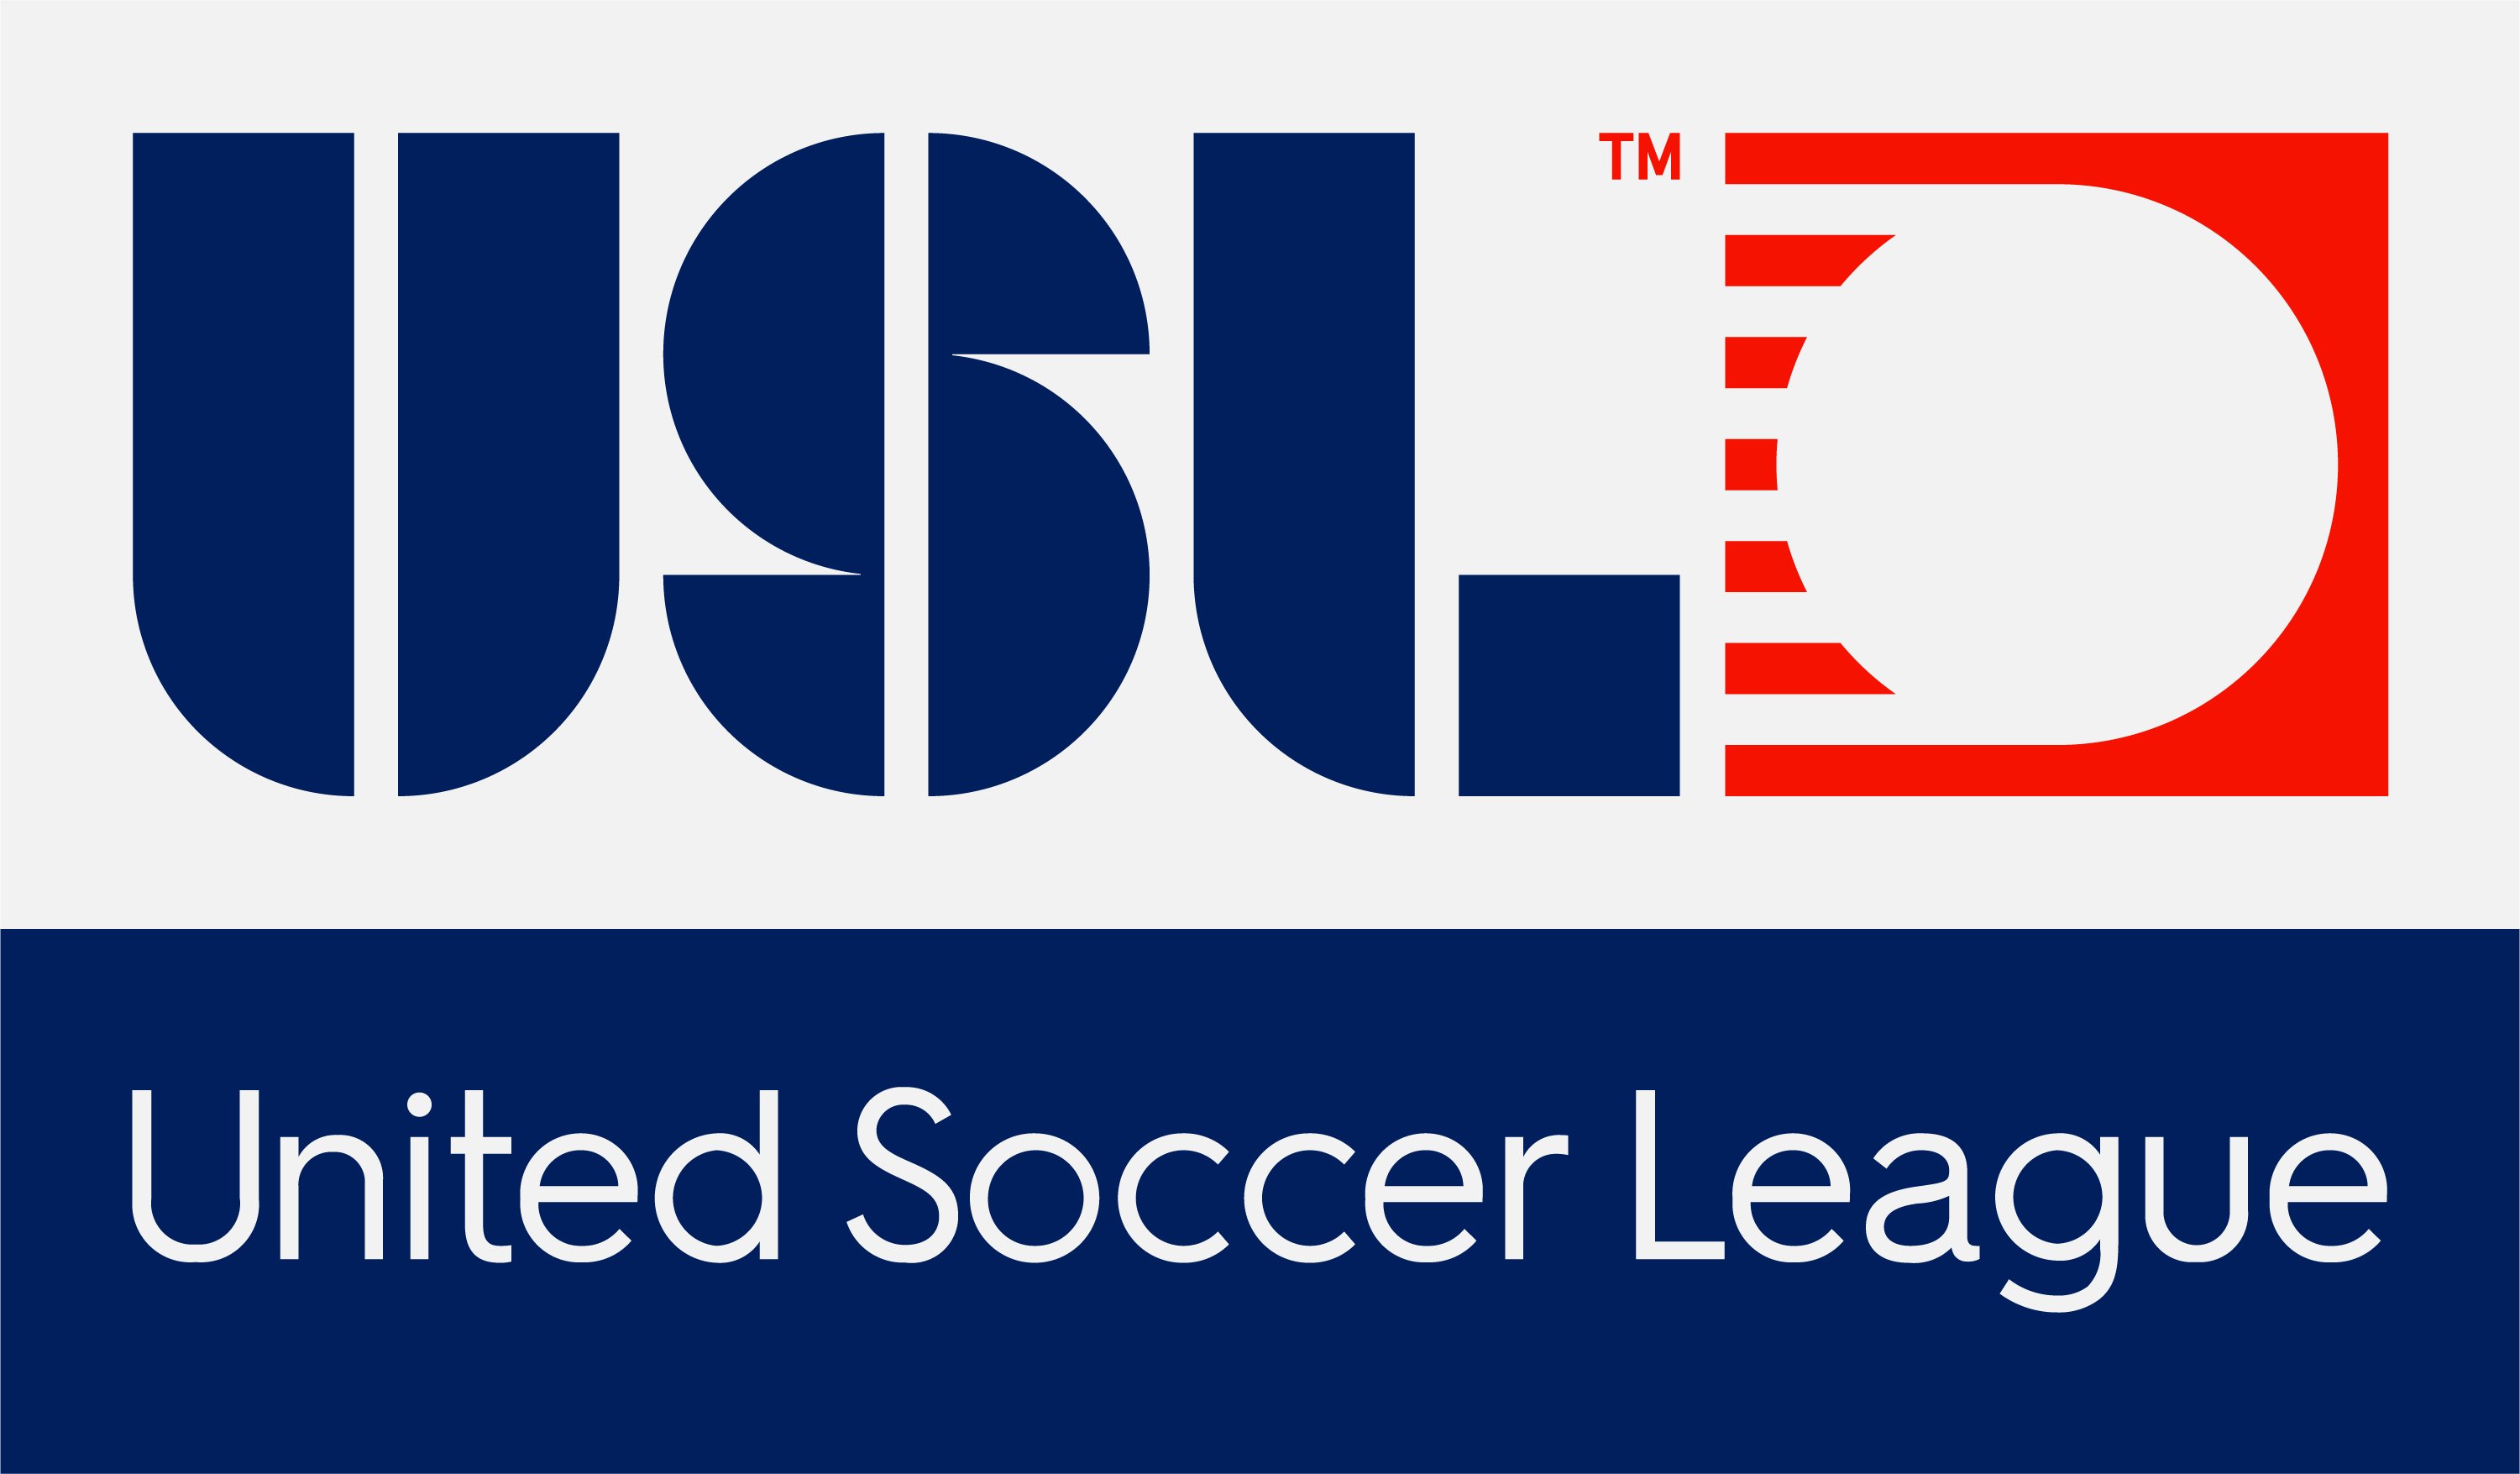 USL Logo - United Soccer League